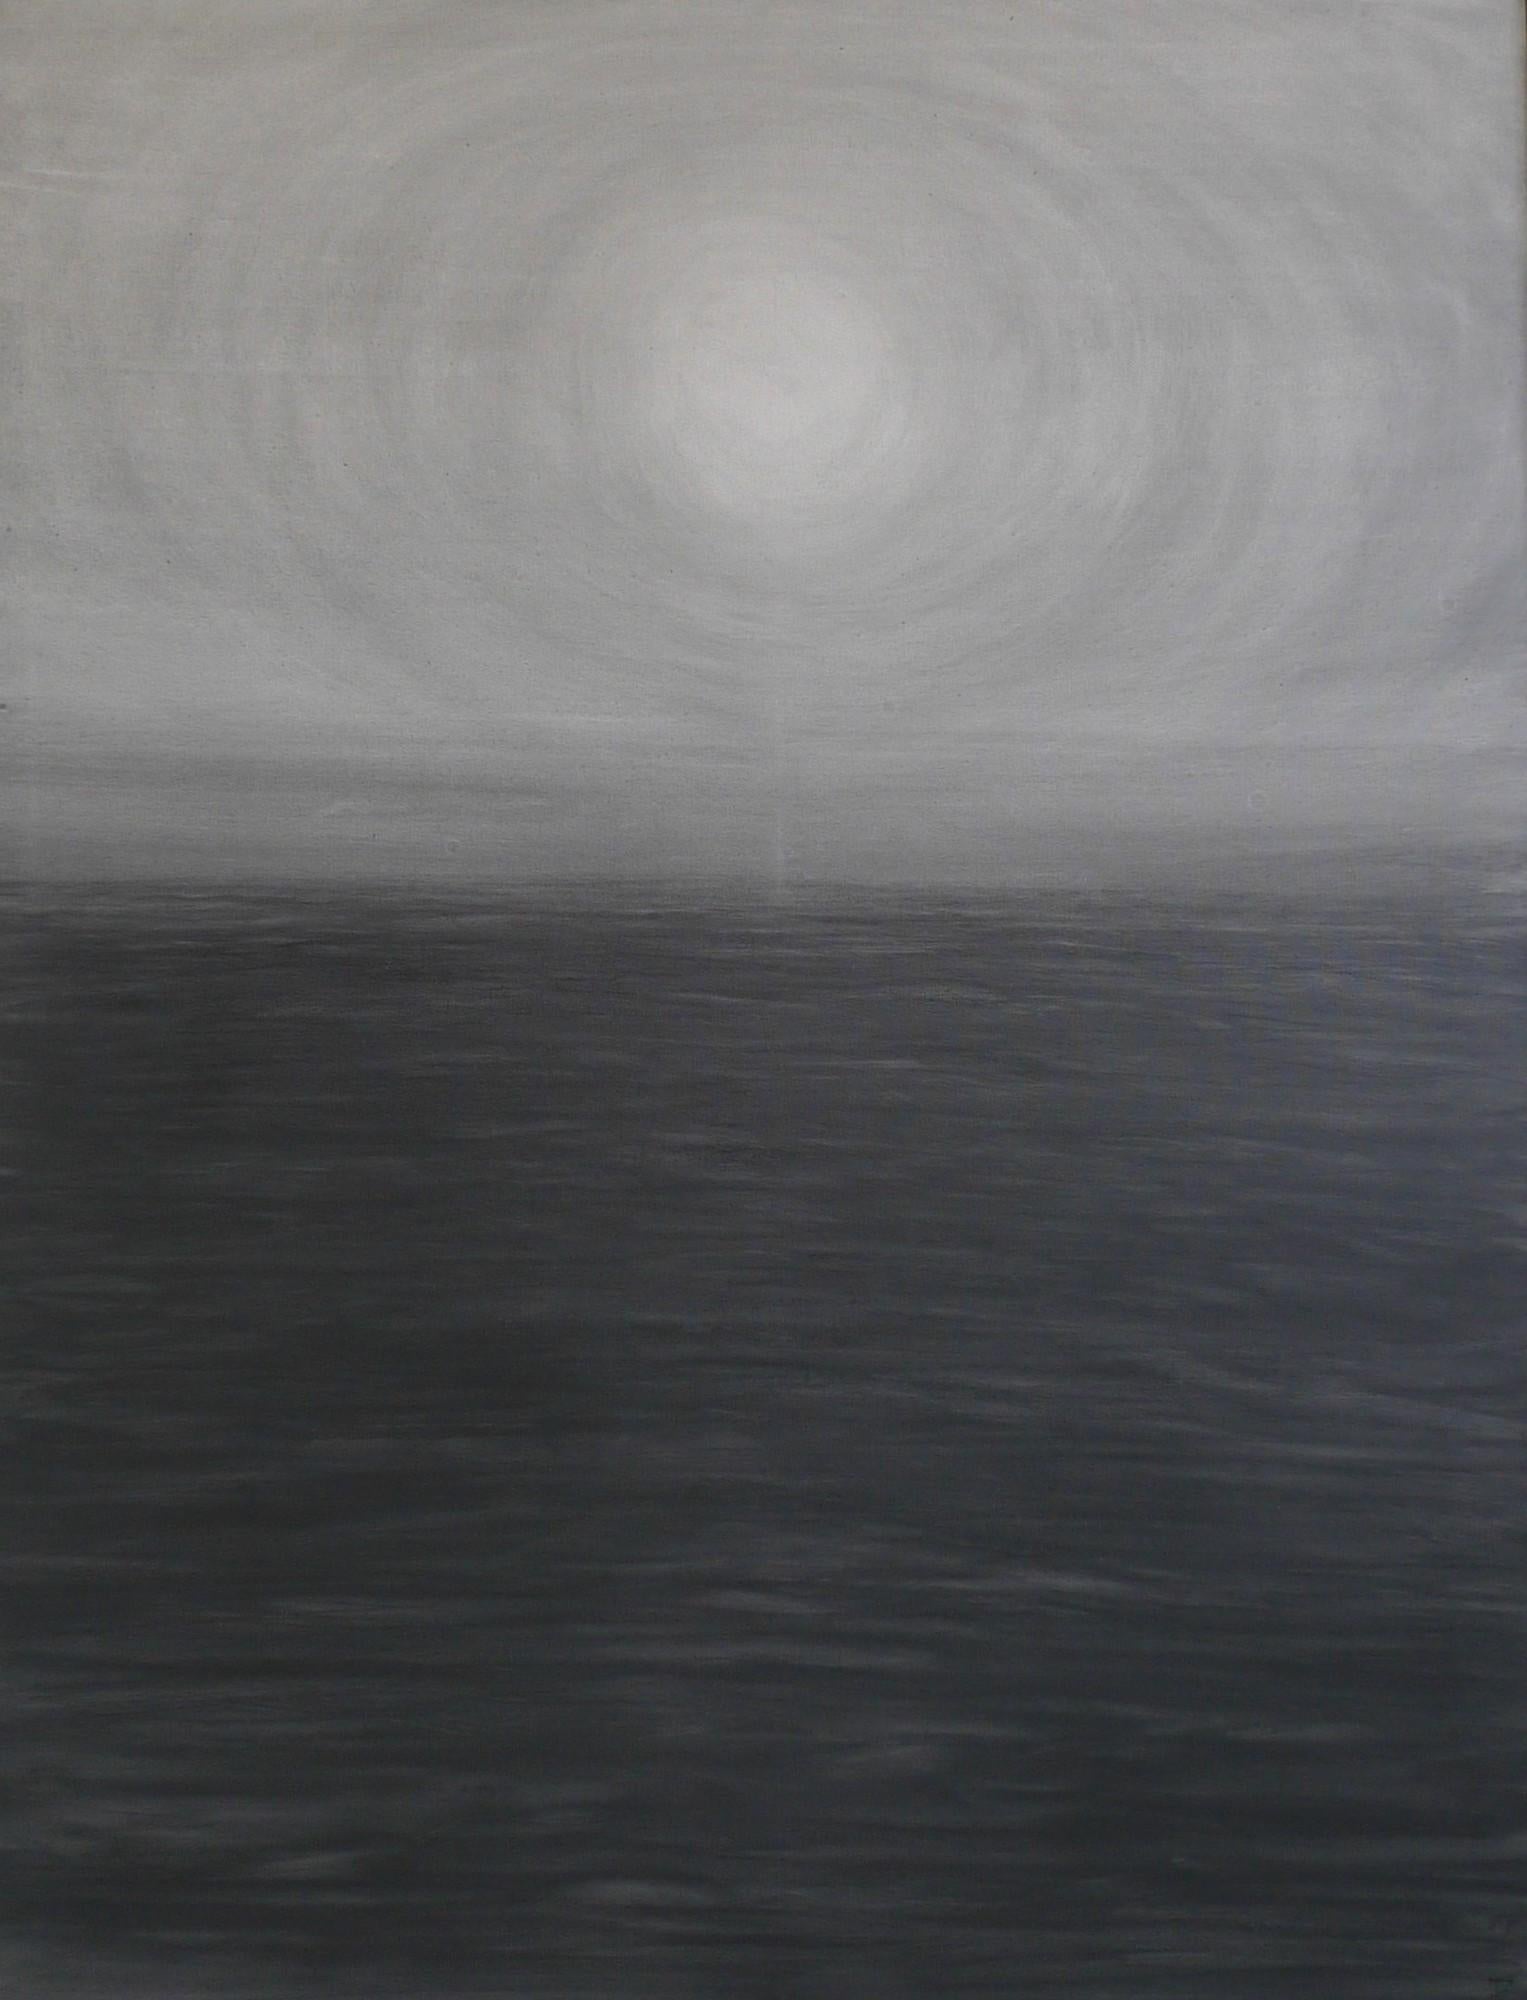 Astre by Franco Salas Borquez - Contemporary seascape painting, waves, dark tone